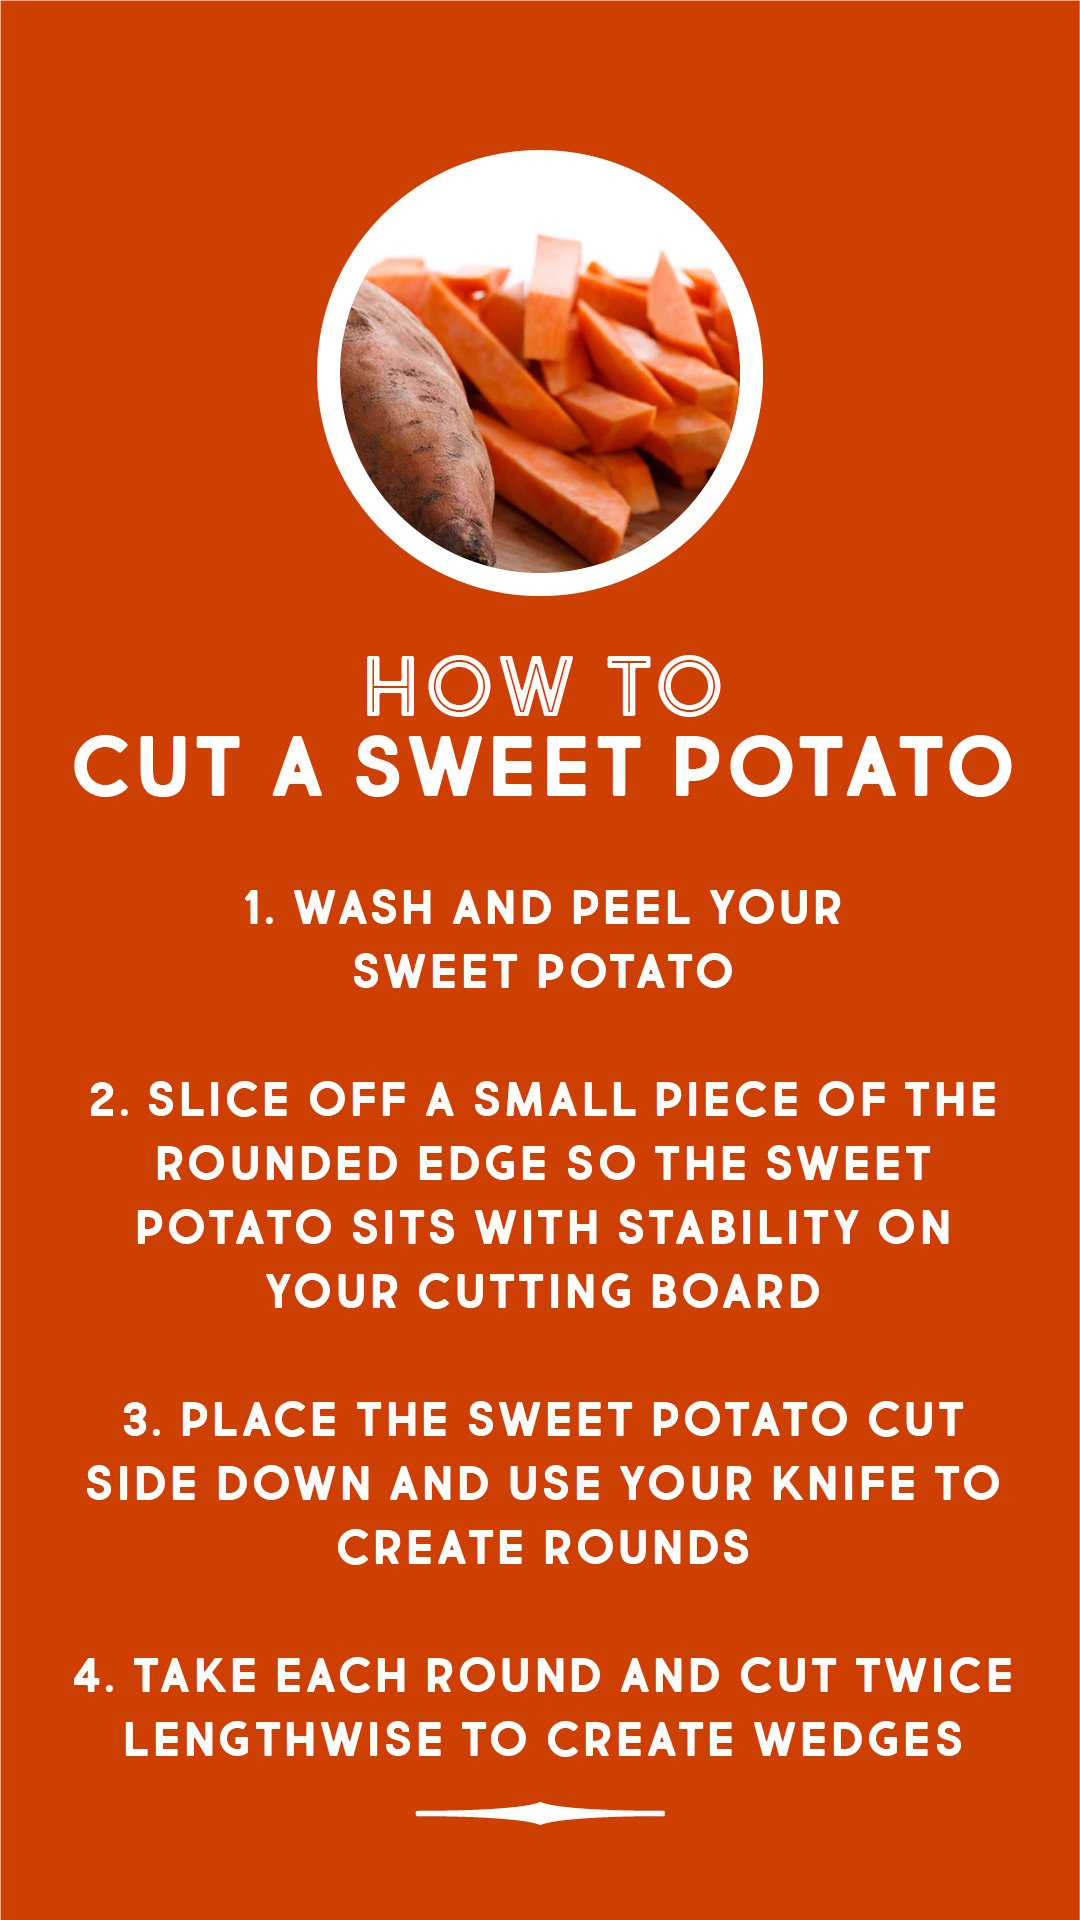 How to cut a sweet potato